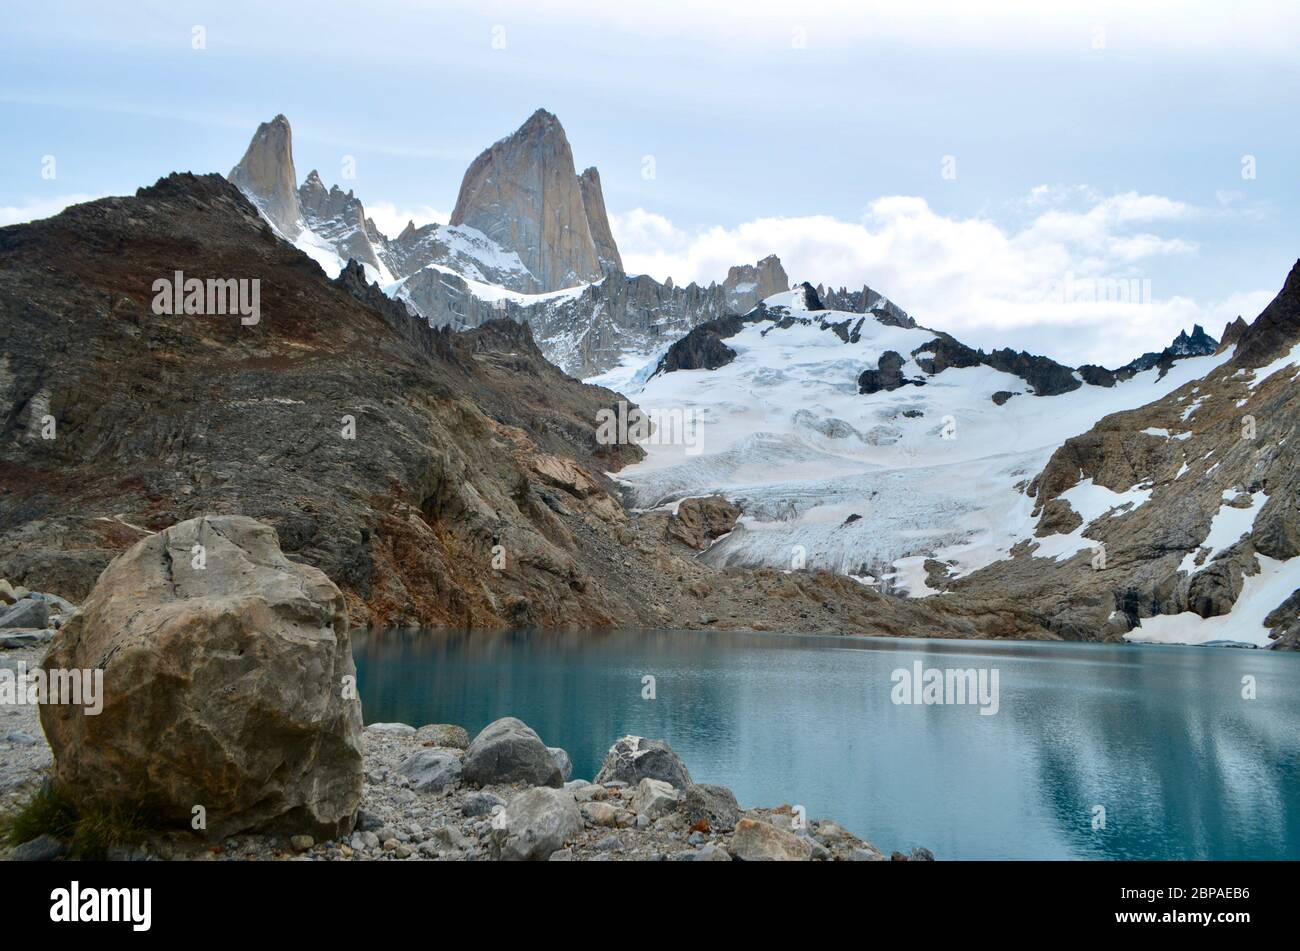 View of Mount Fitz Roy at Chalten, Patagonia Argentina Stock Photo